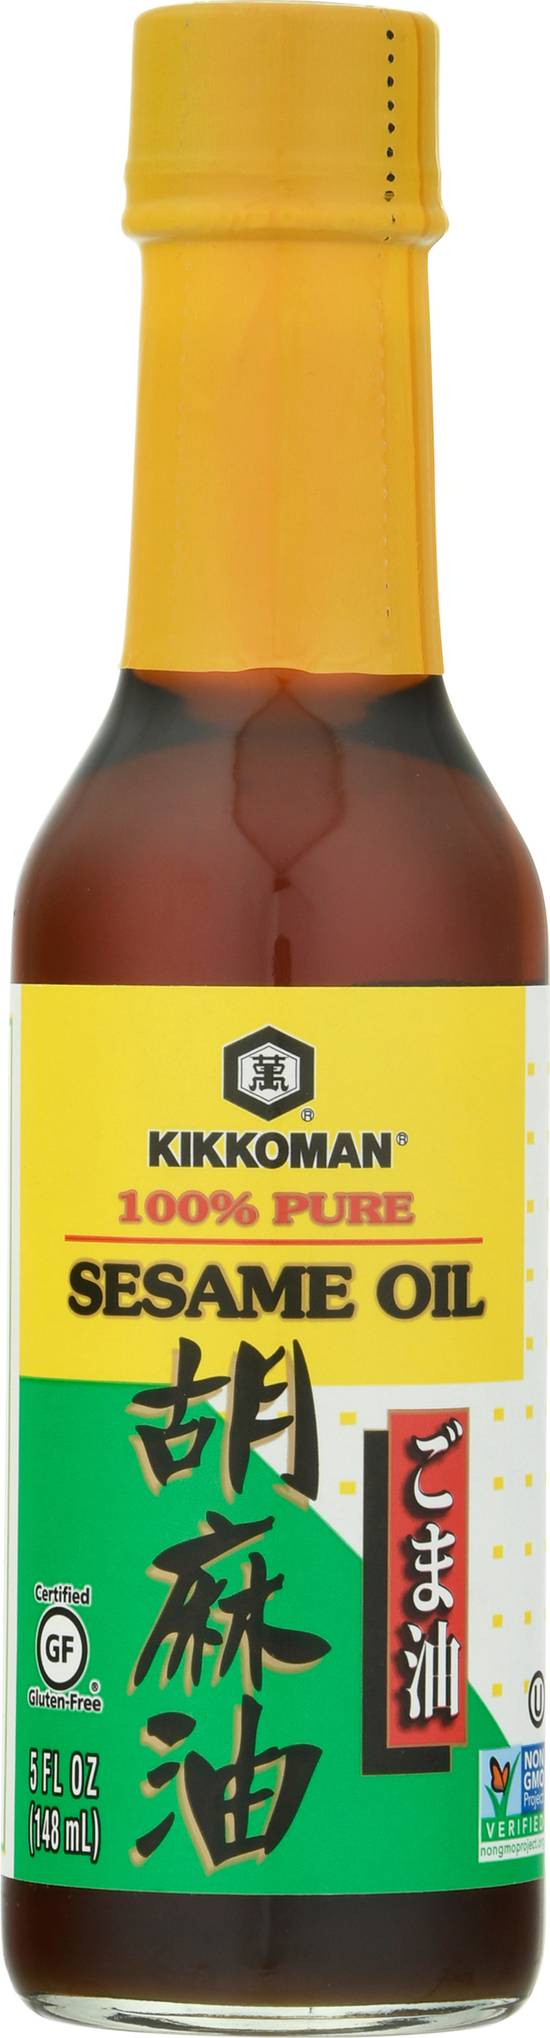 Kikkoman 100% Pure Sesame Oil